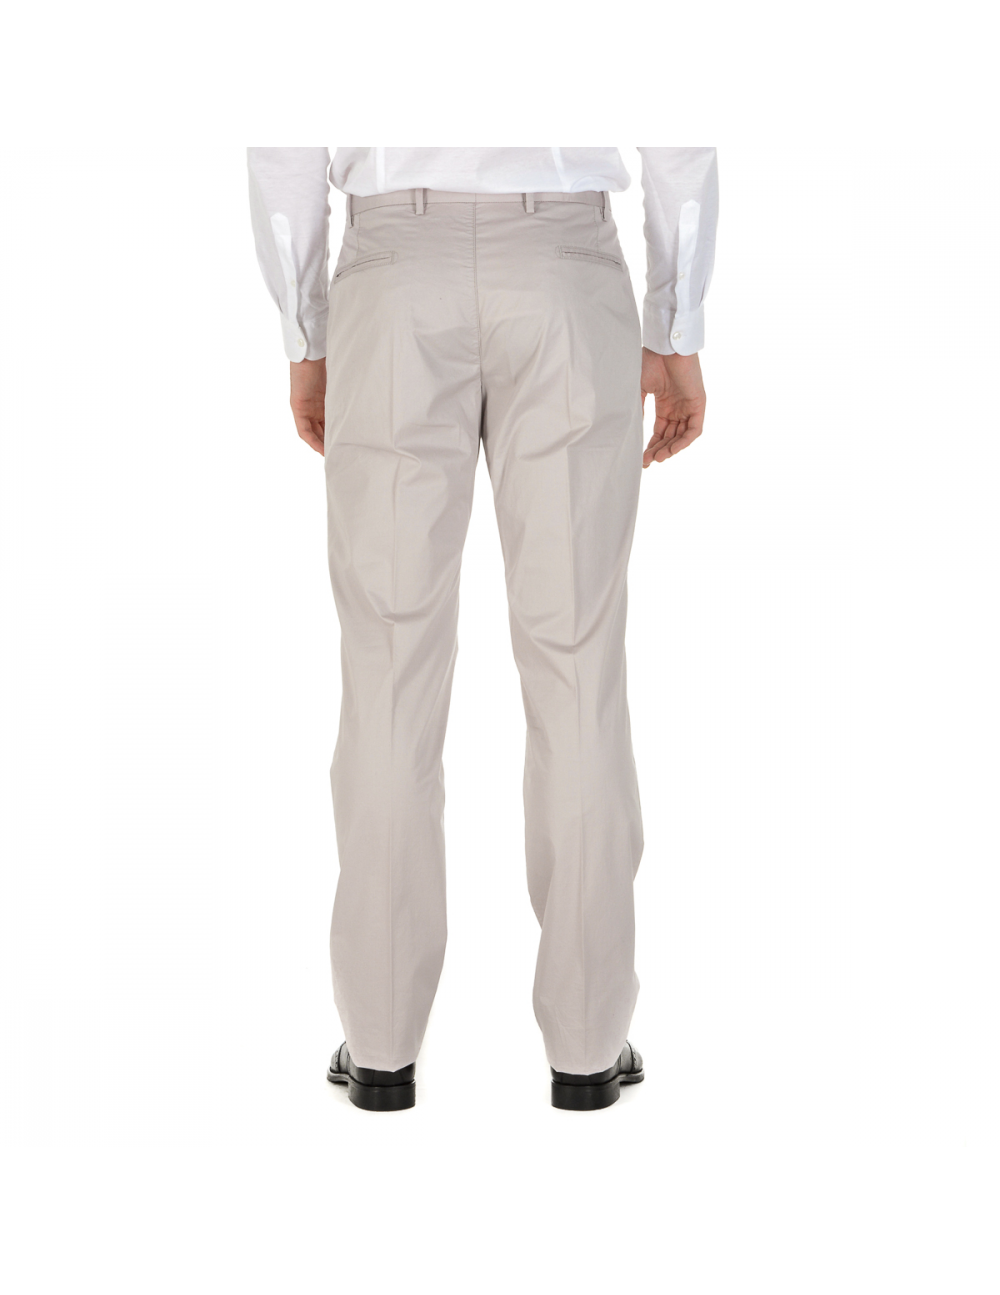 Armani Collezioni Mens Pants Grey - YuppyCollections